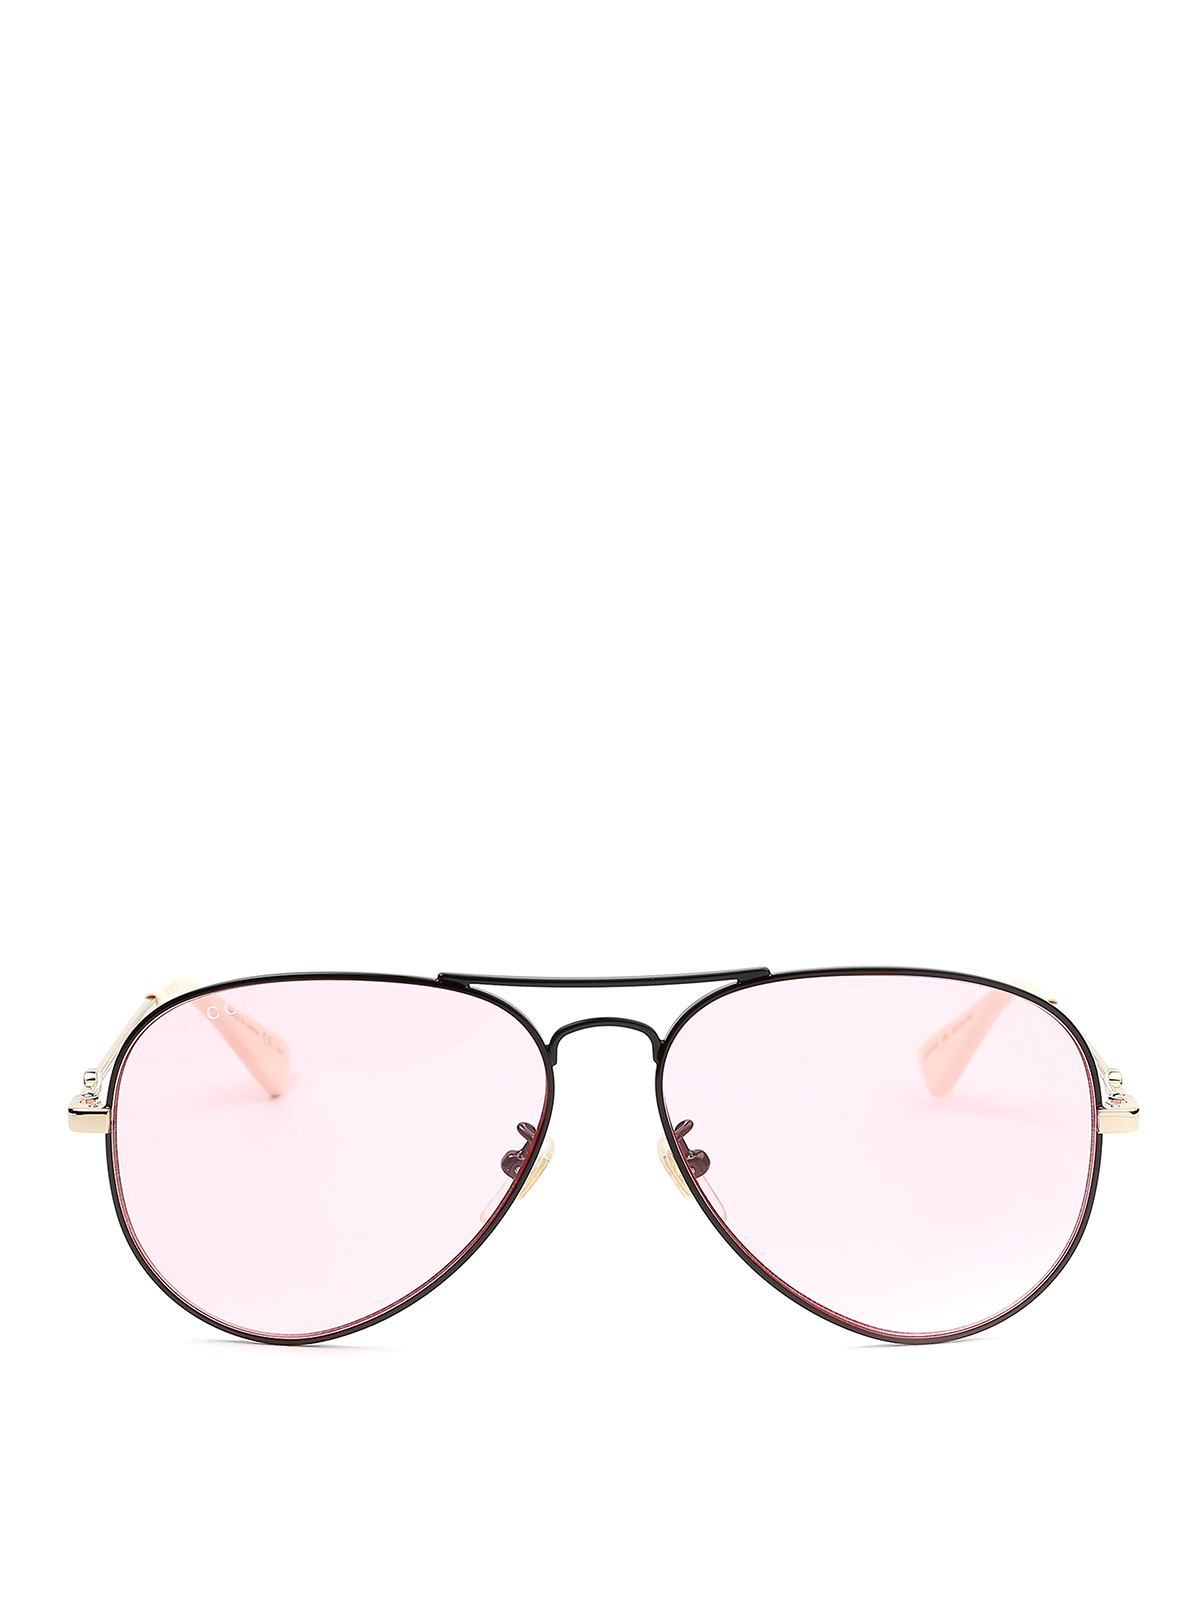 gucci sunglasses pink lens